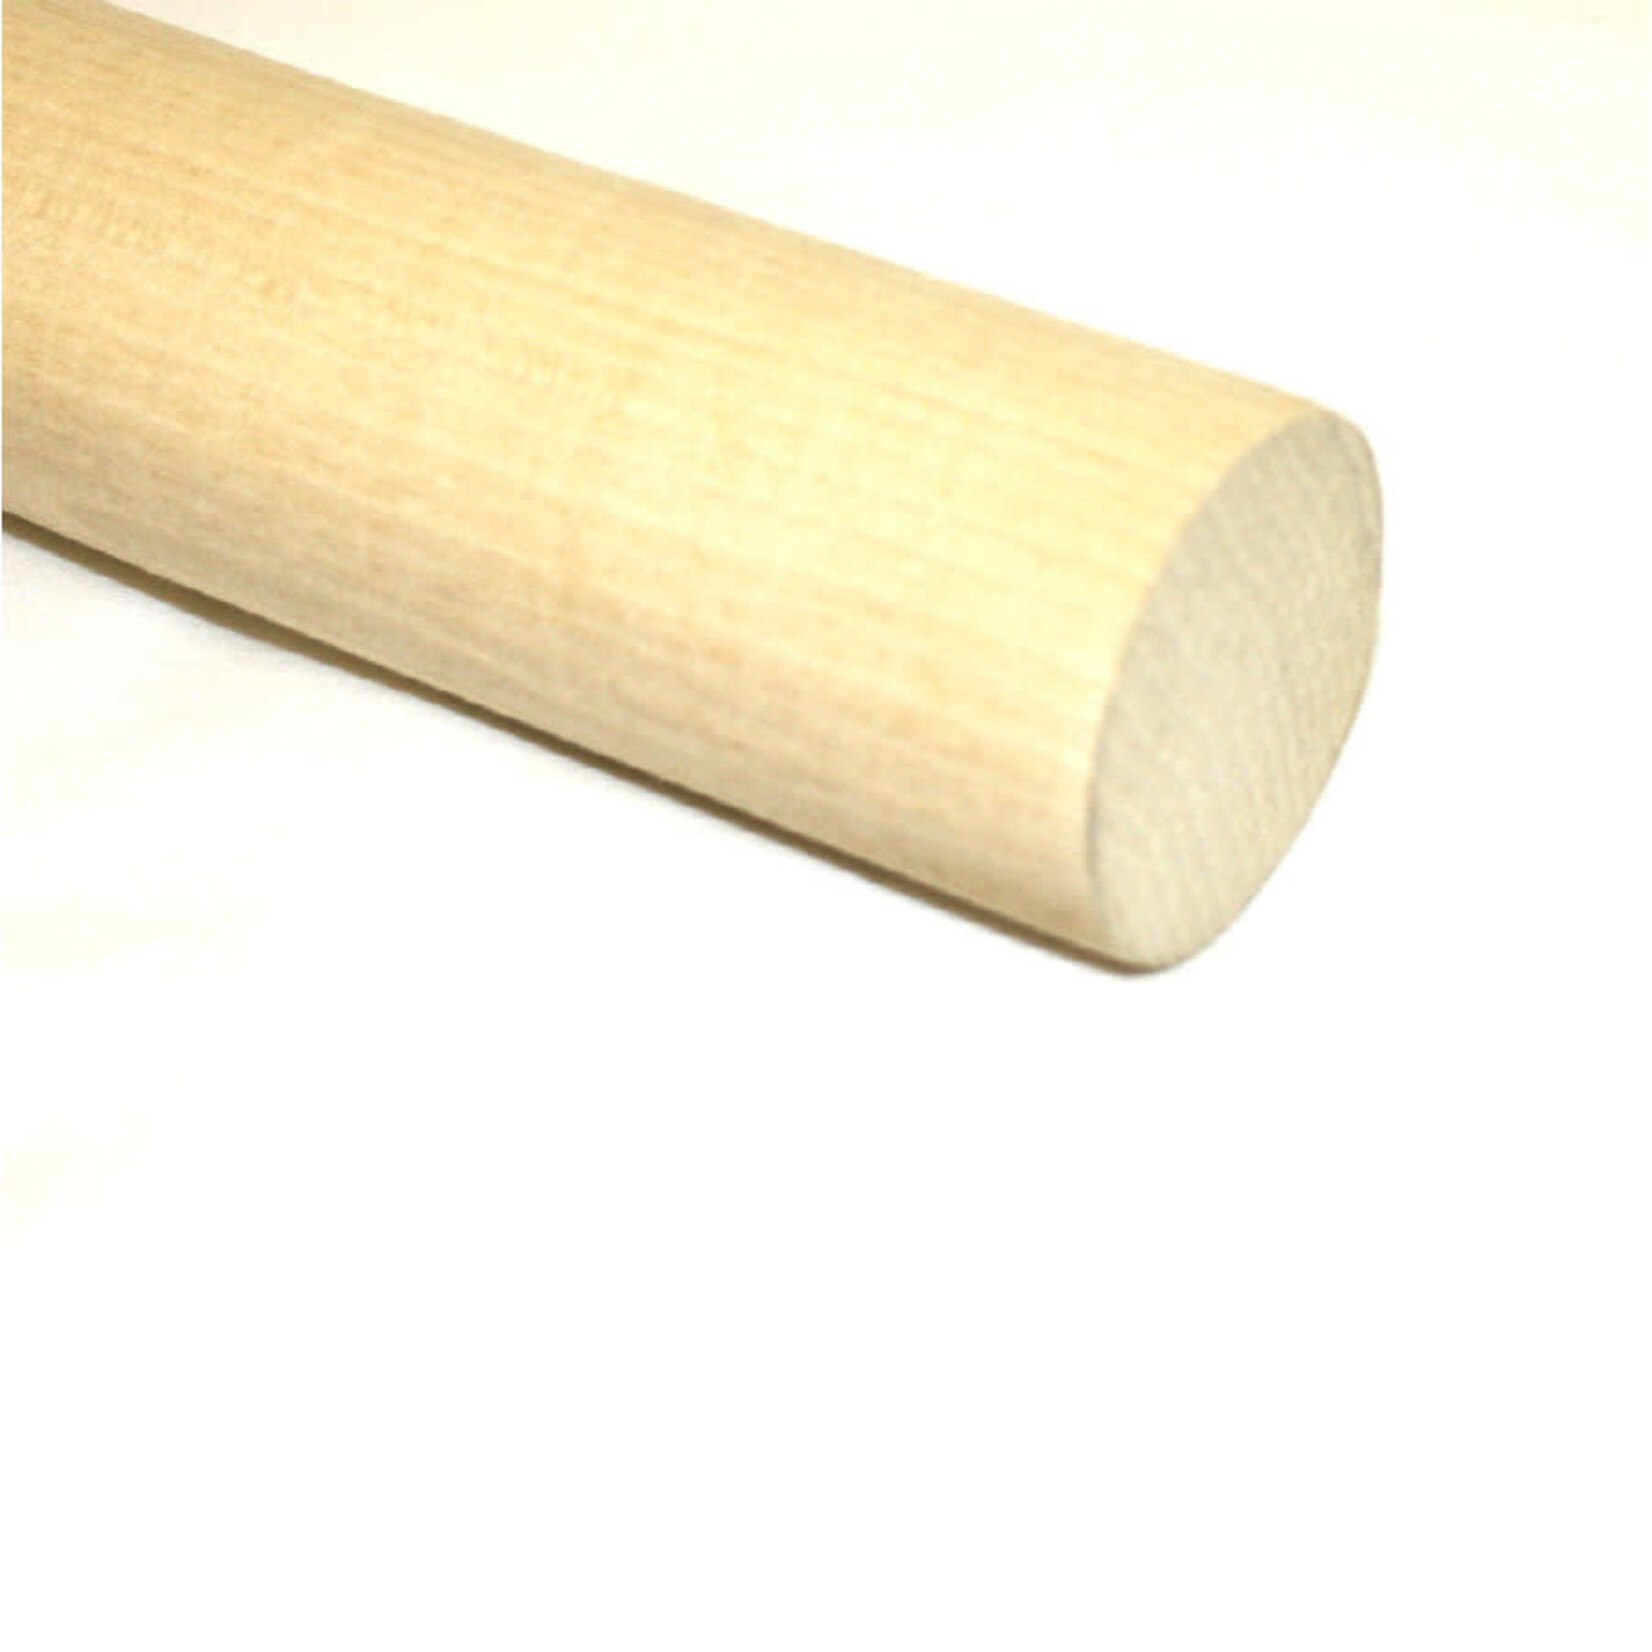 Wooden Dowel Stick 4 feet Grey 3/16 Inch